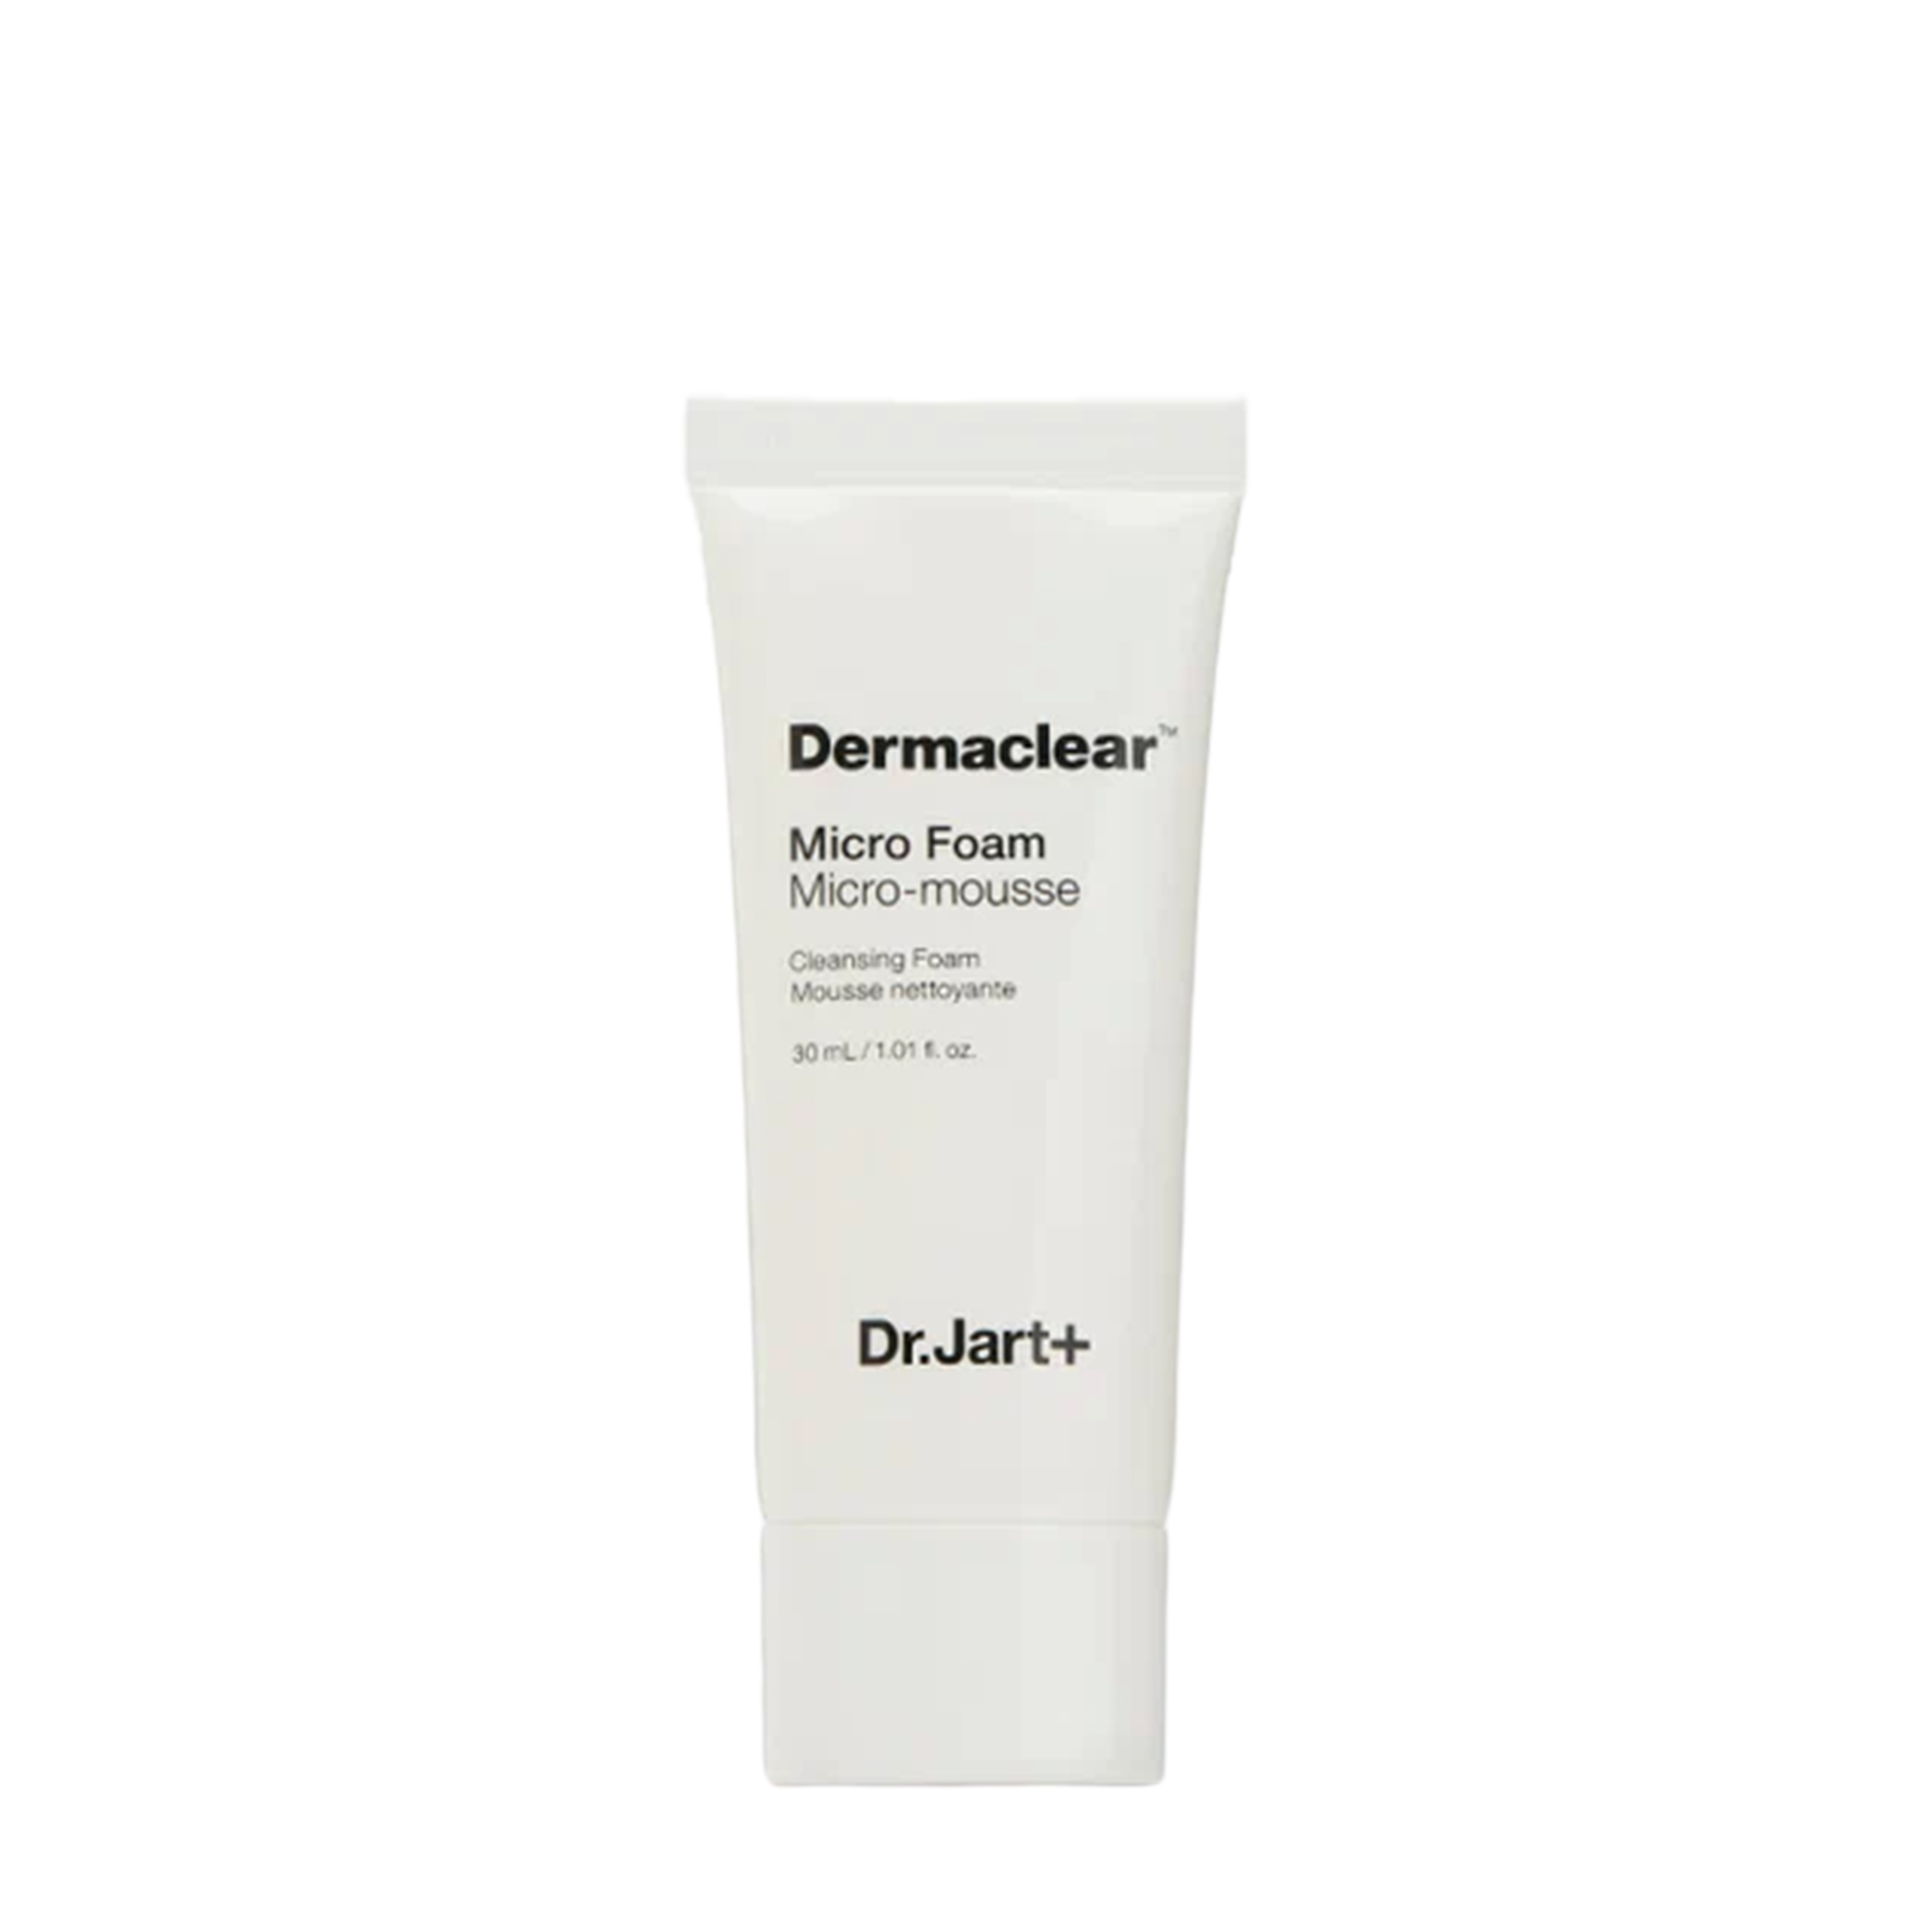 Dr.Jart+ Dr.Jart+ Гель-пенка для глубокого очищения кожи лица Dermaclear Micro Foam Cleanser _x000D_ 30 мл